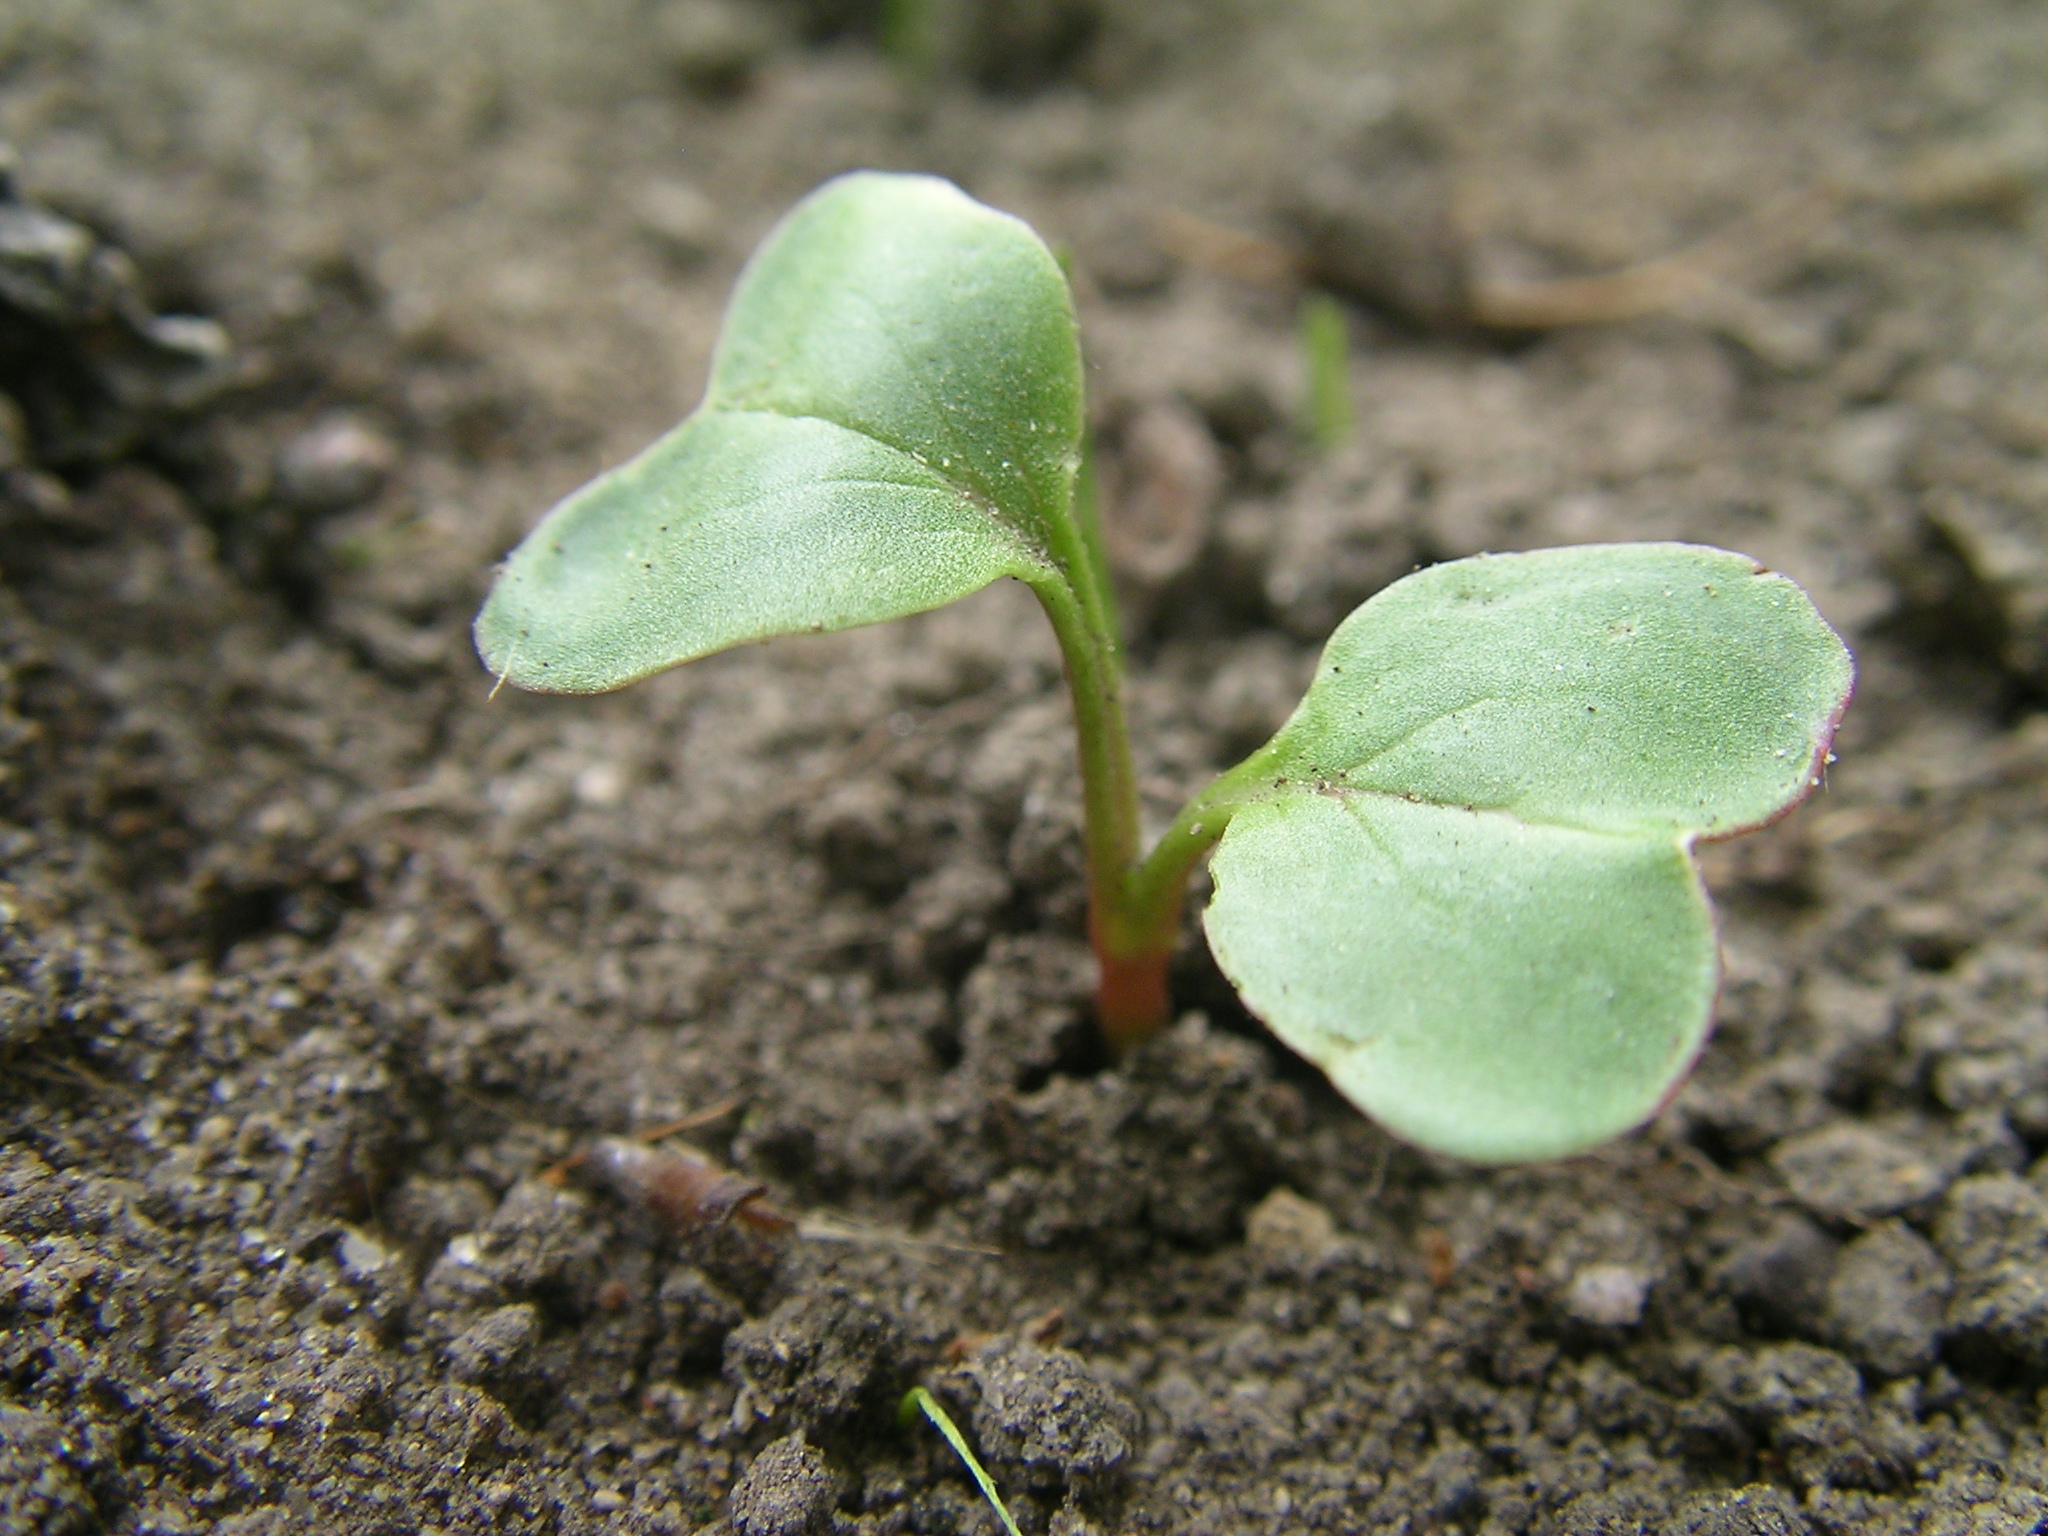 File:Seedling Radish.JPG - Wikimedia Commons